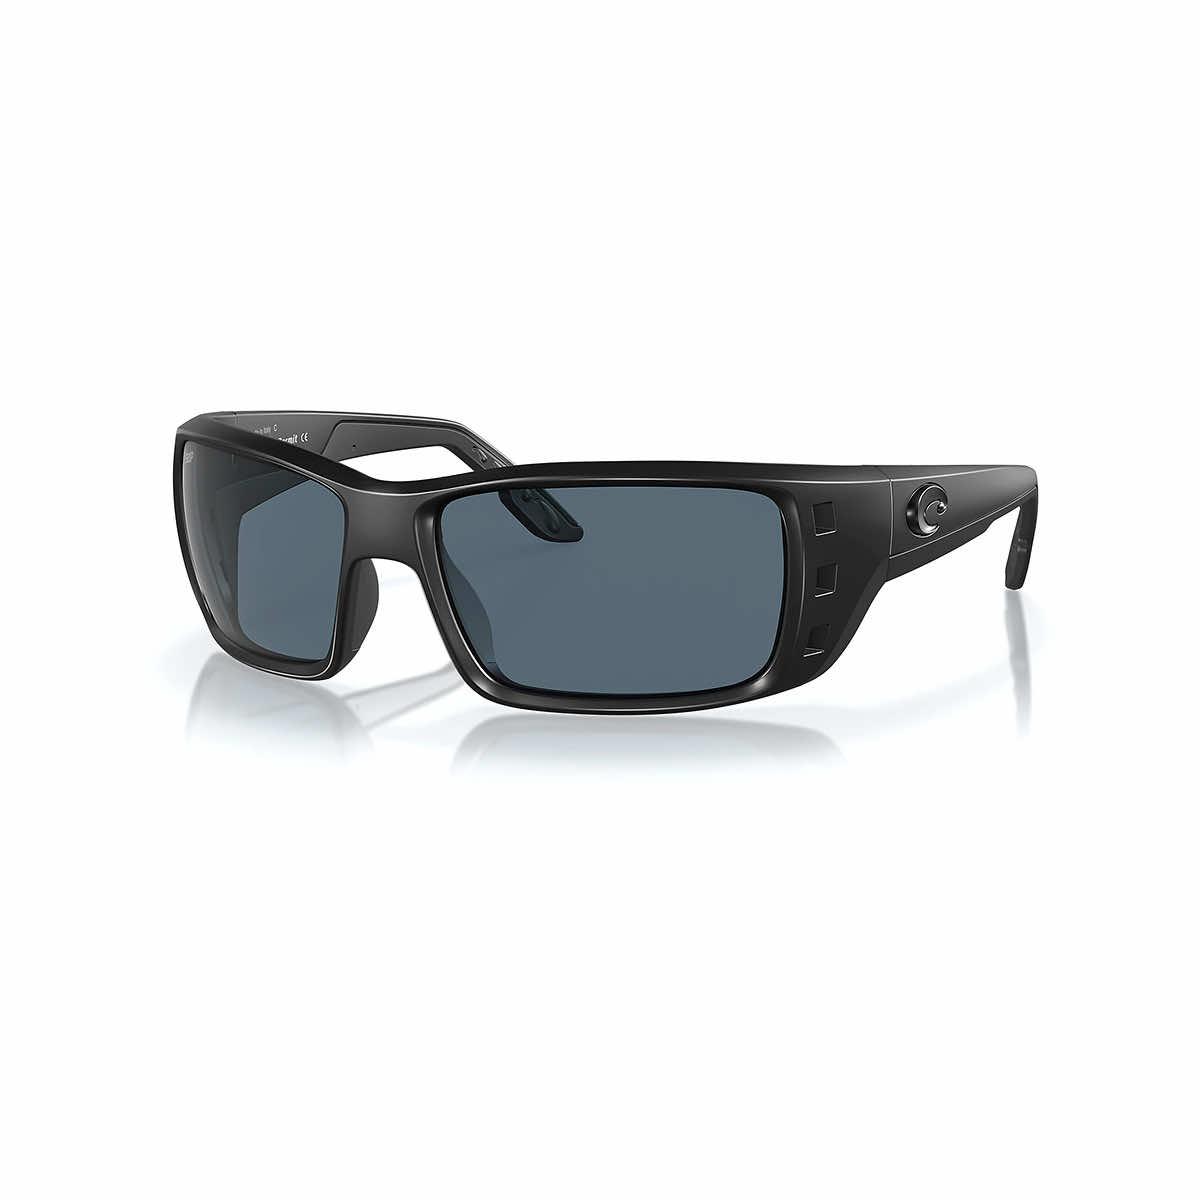  Permit 580p Sunglasses - Polarized